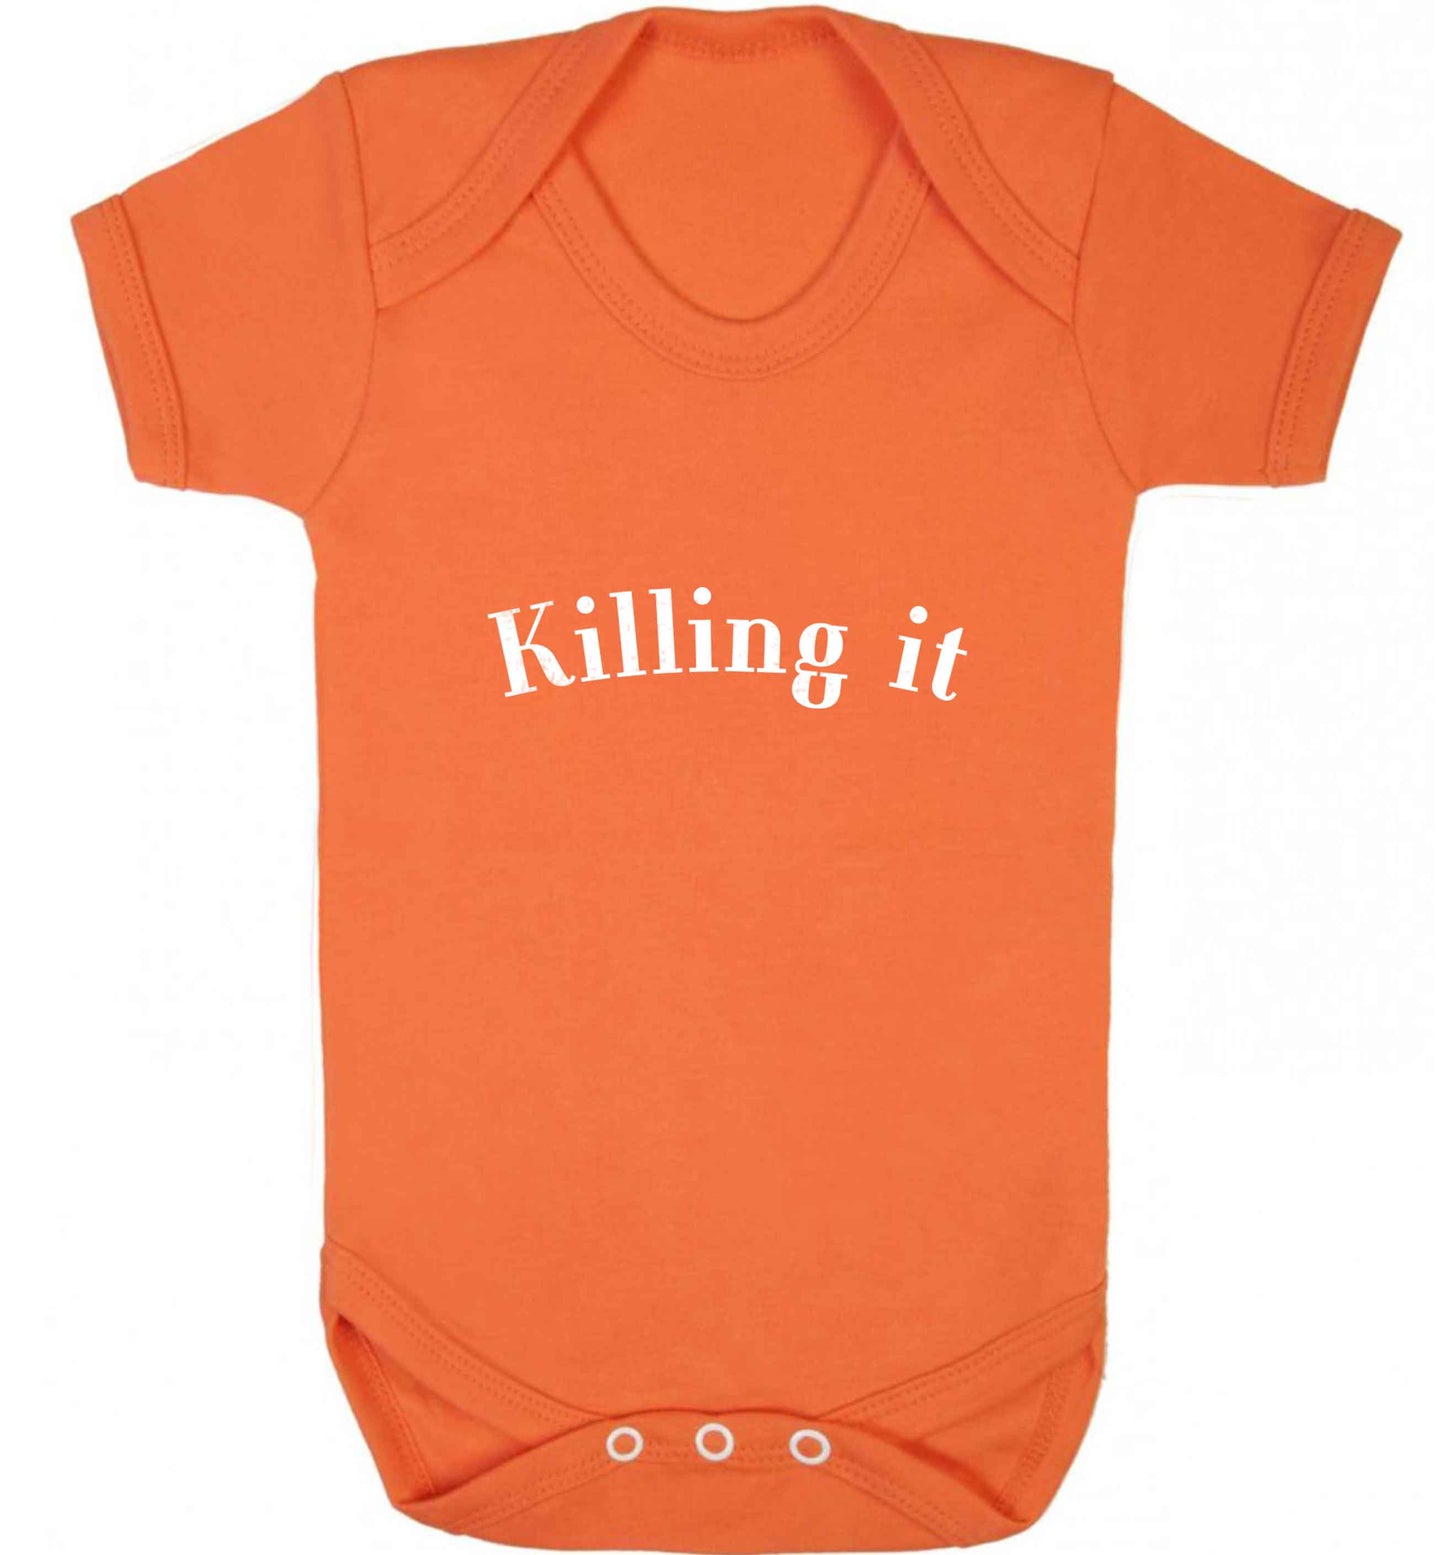 Killing it baby vest orange 18-24 months